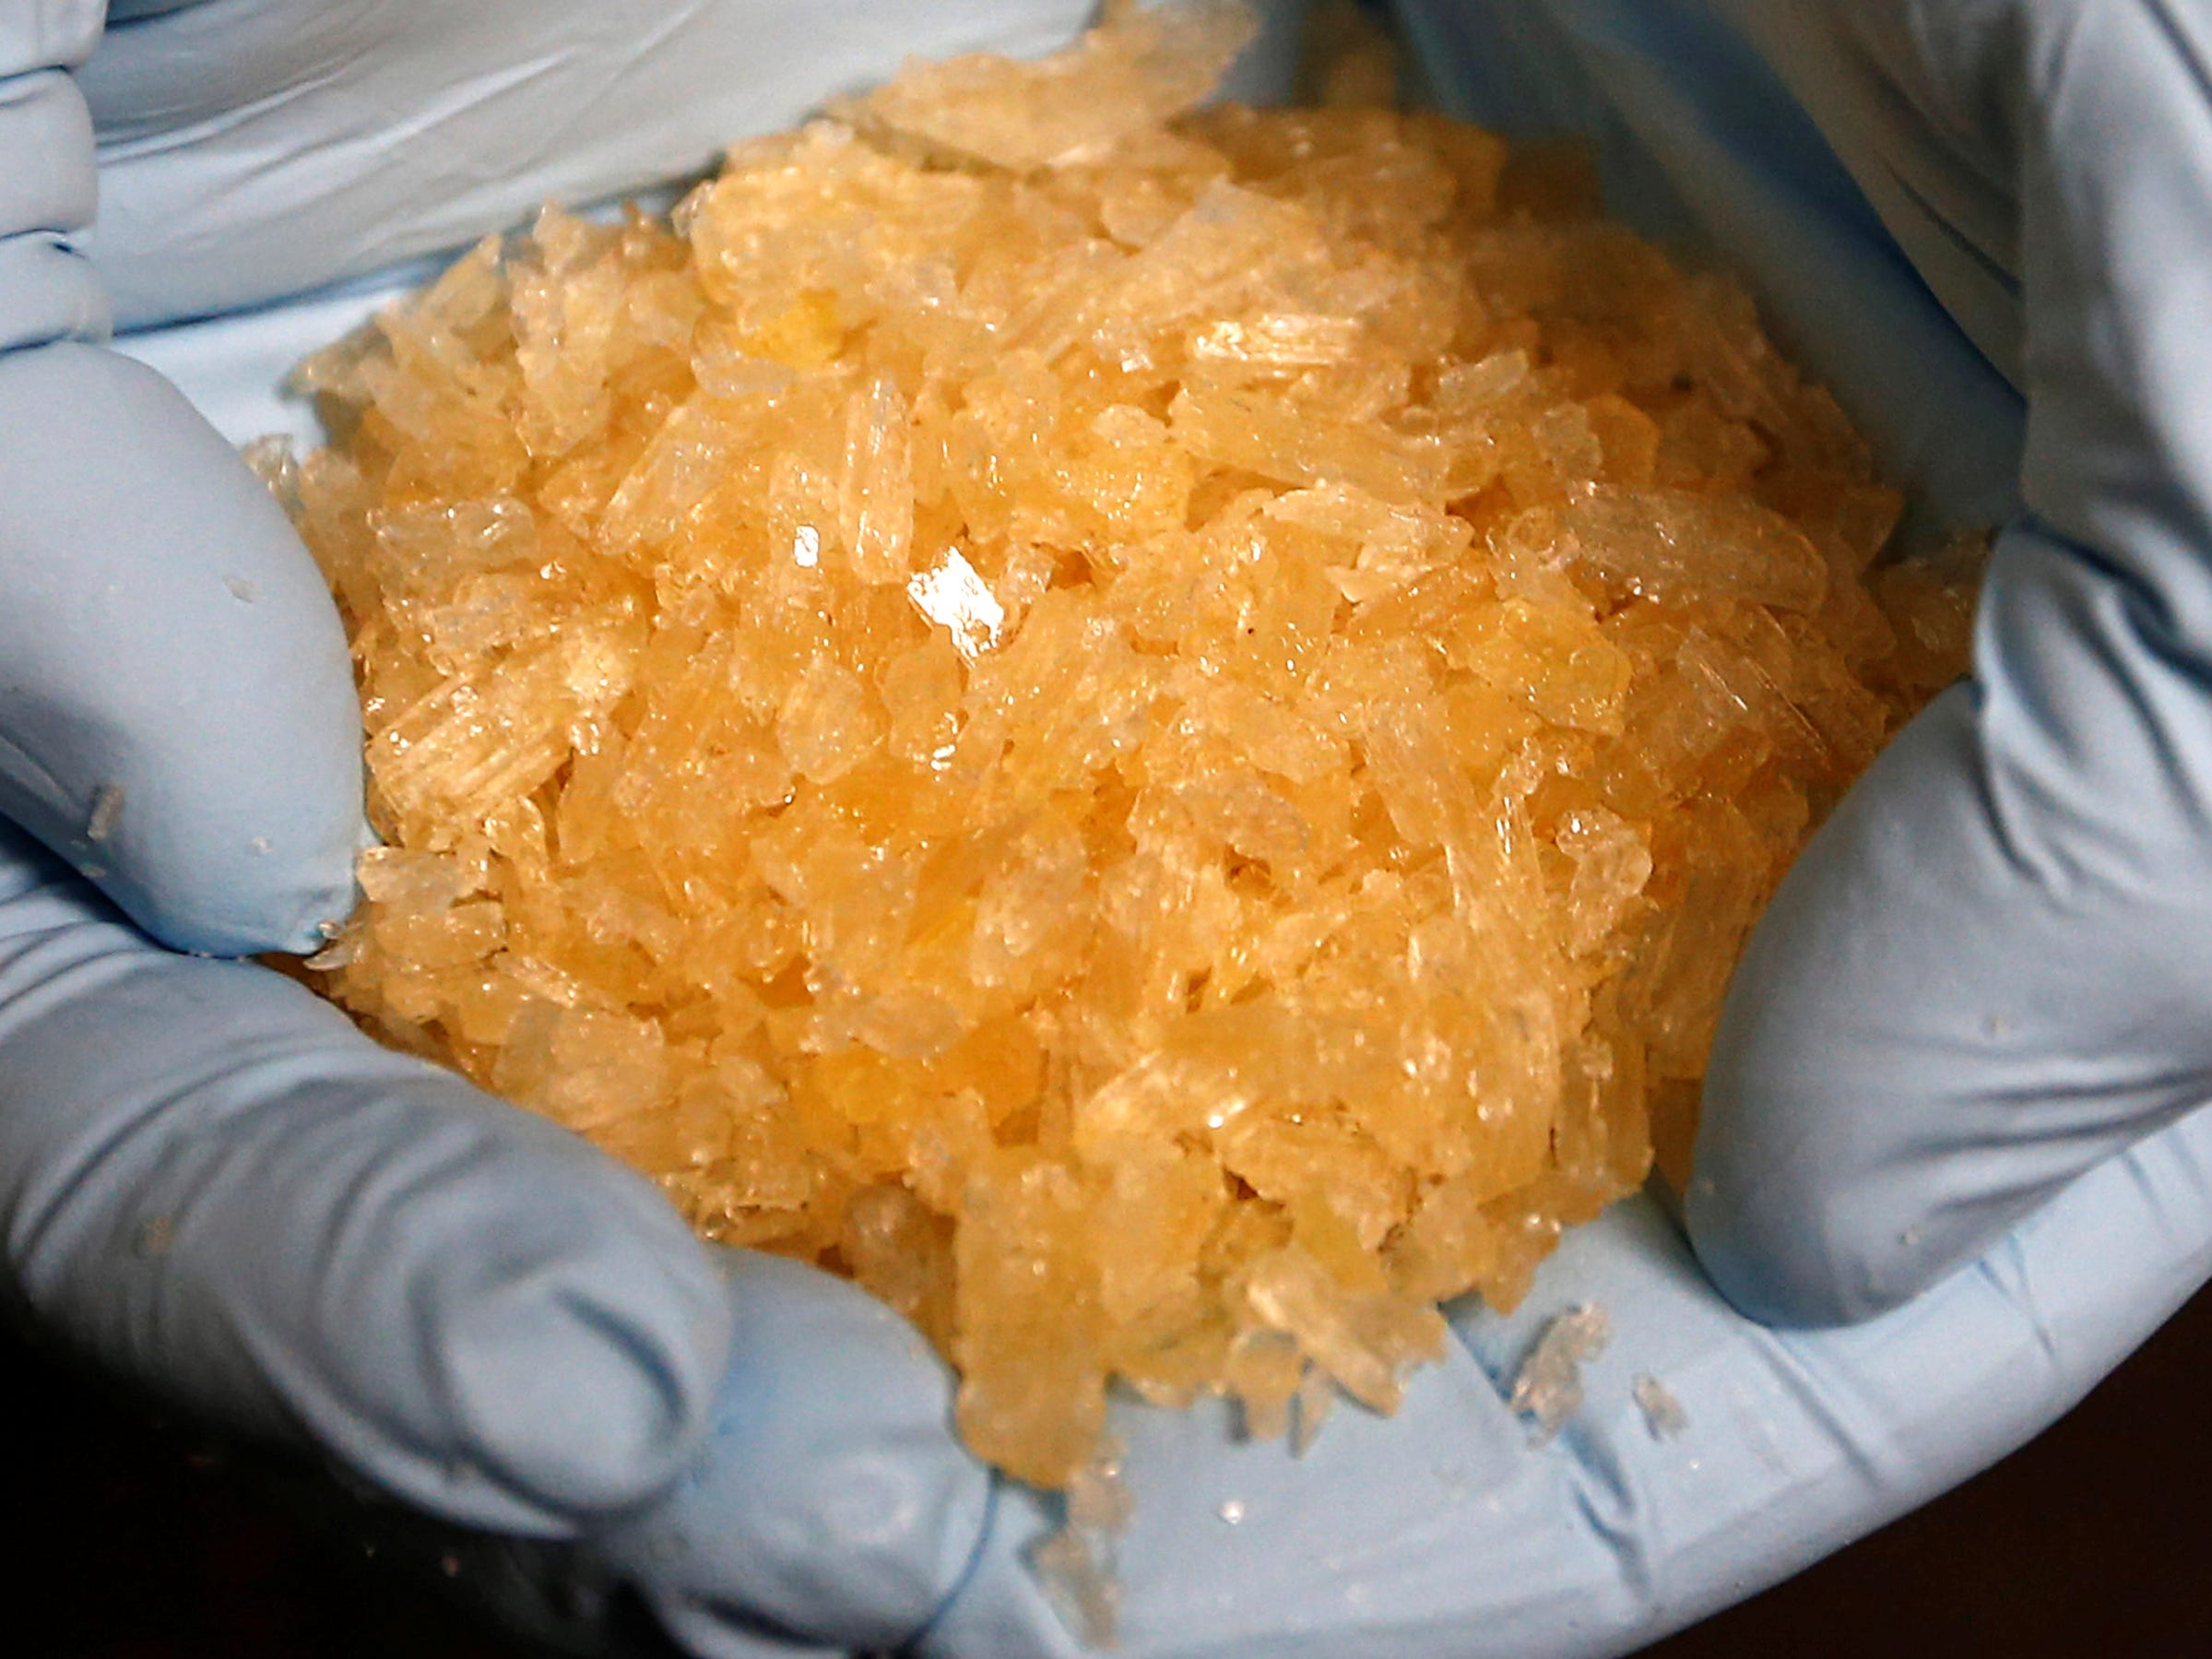 Crystal Methamphetamin (Crystal Meth)